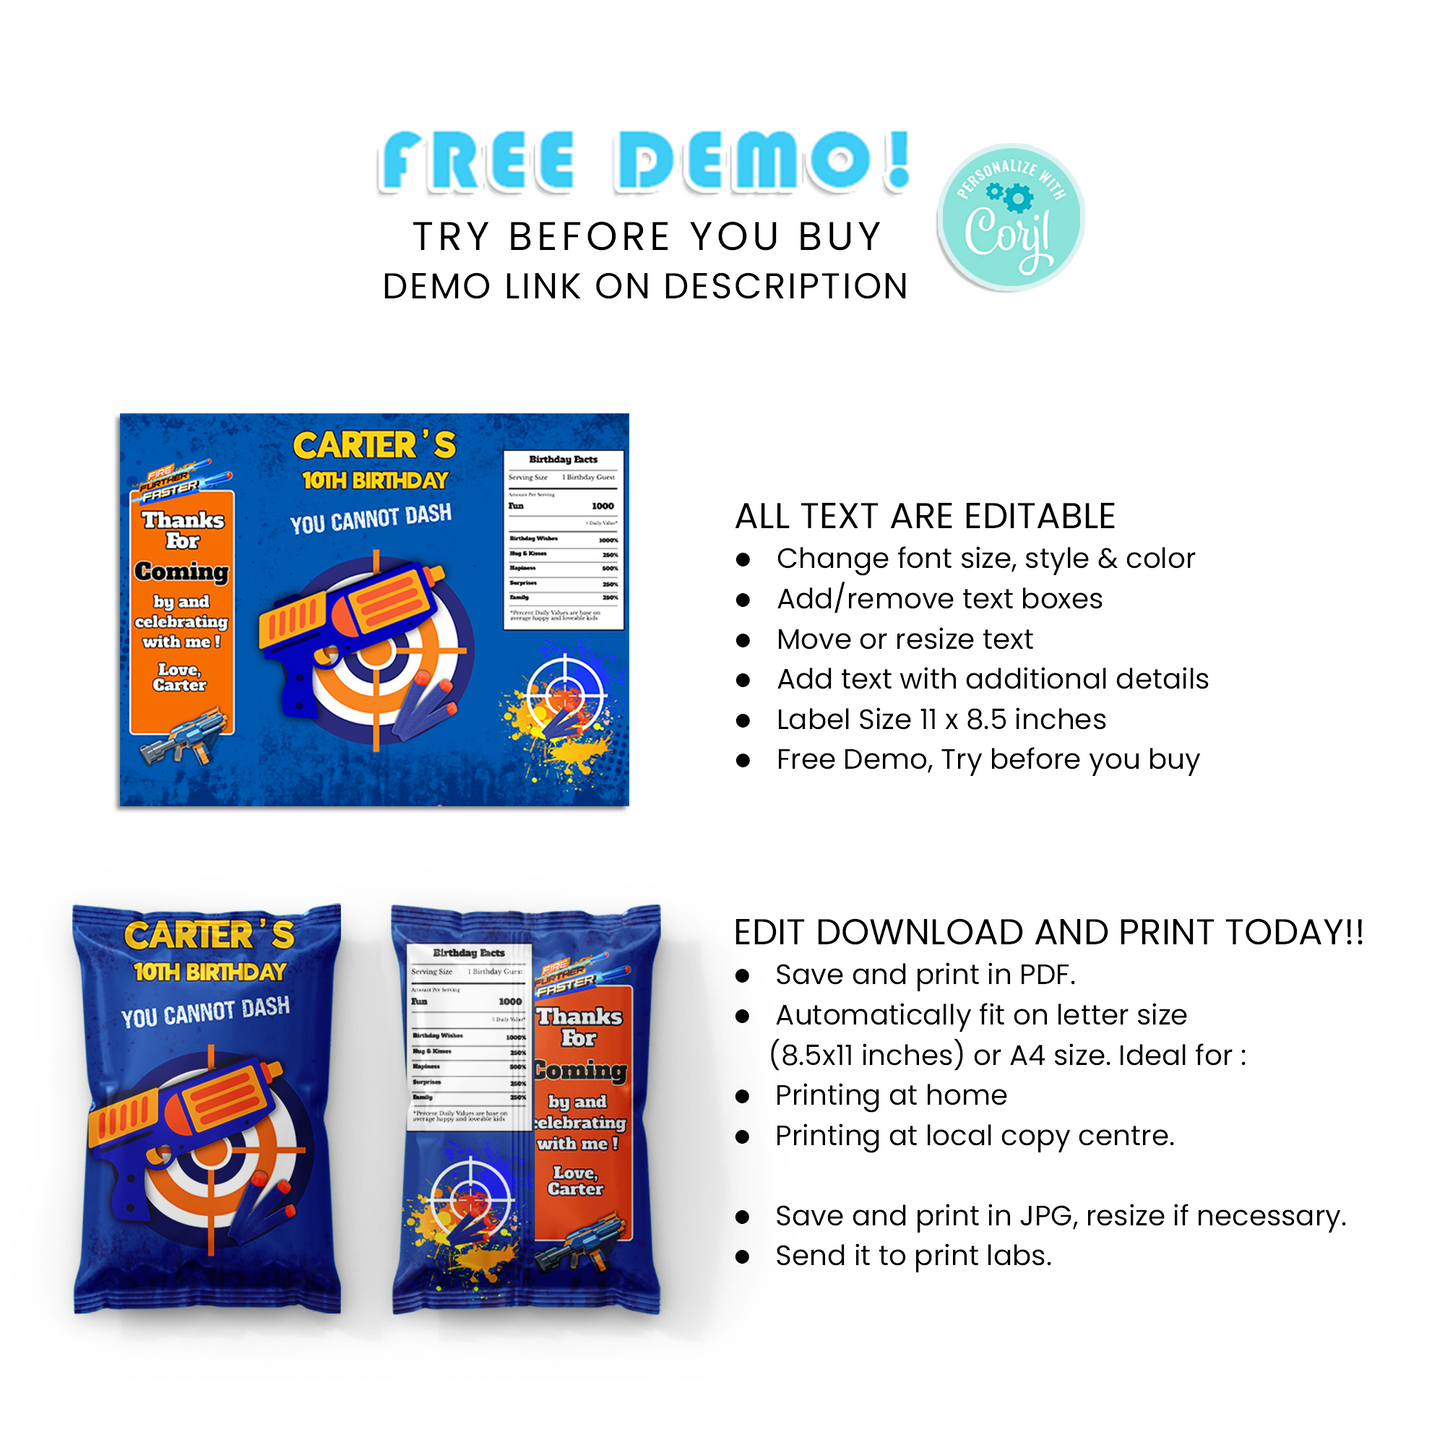 Crunch and Munch: Dart Gun Chips Bag Label for Savory Snacks